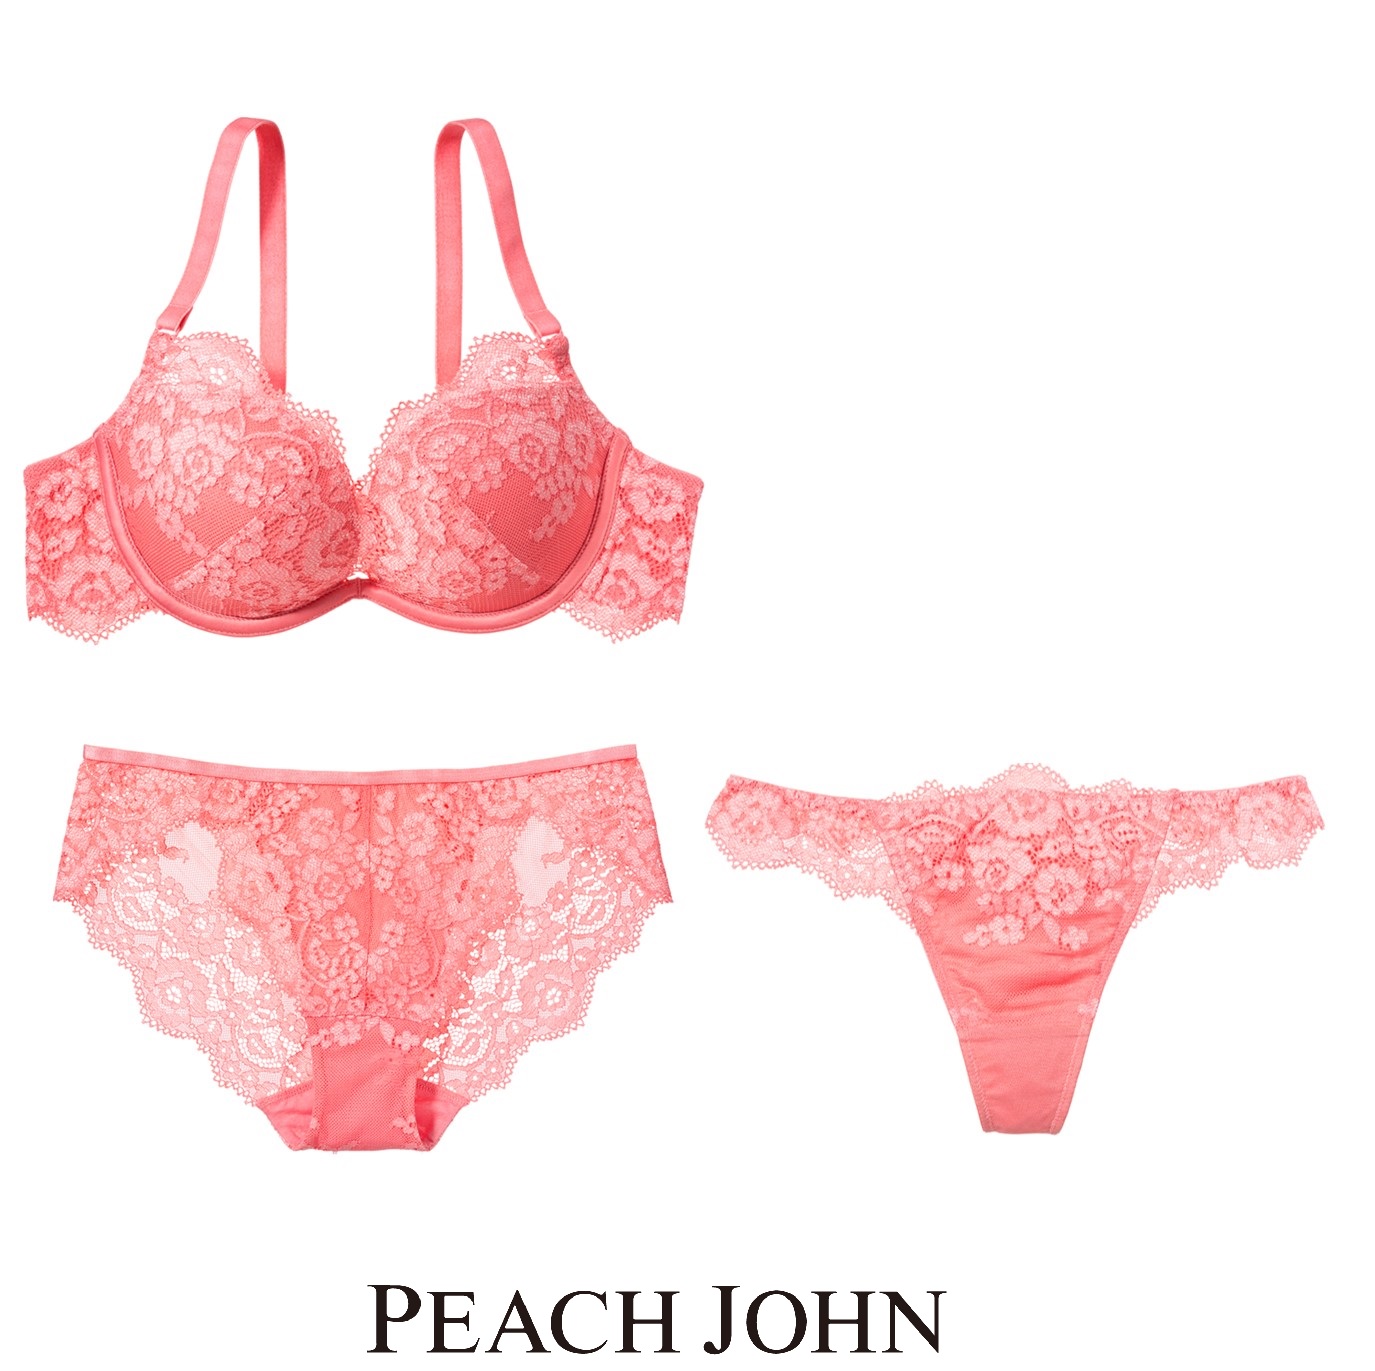 Peach John Disney undies for Valentine's Day - Japan Today